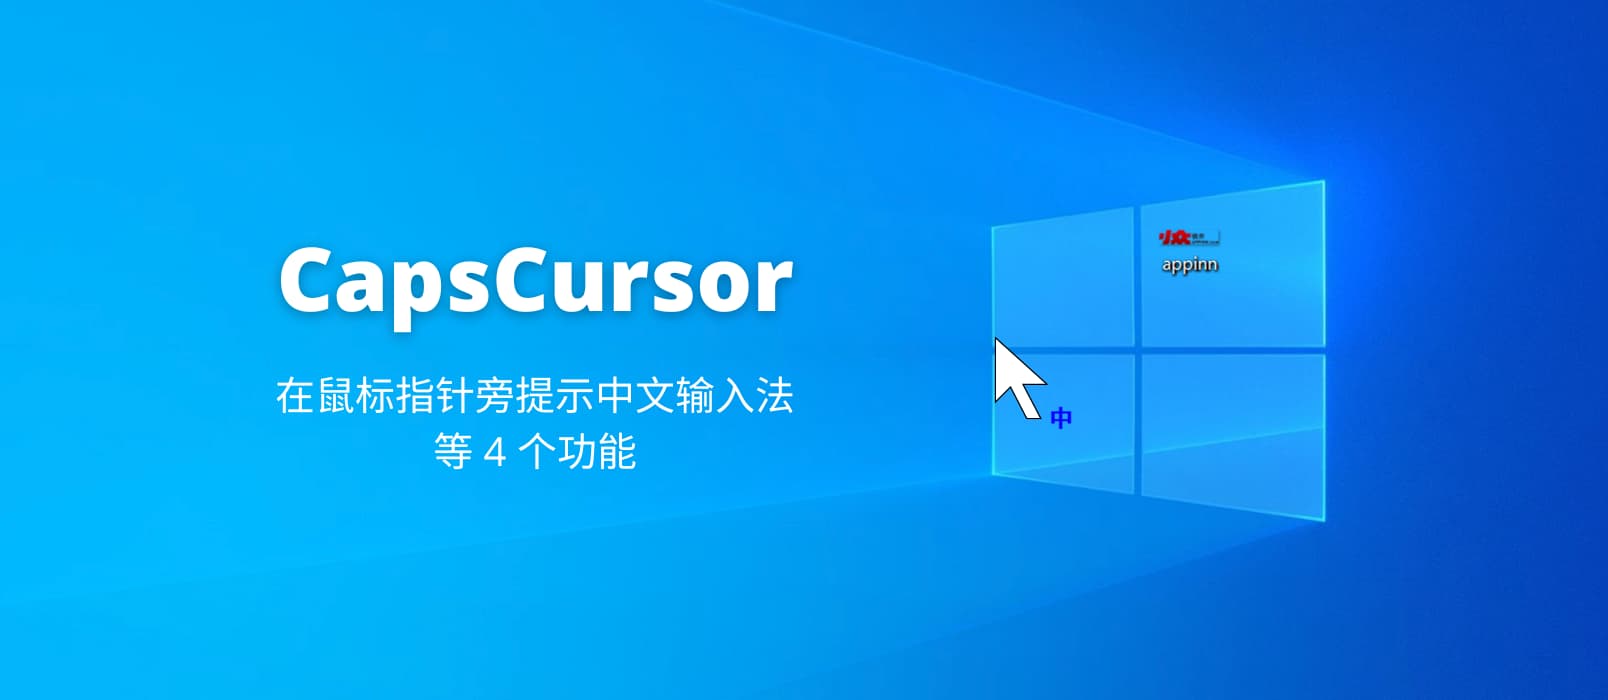 CapsCursor - 大小写键 4 功能辅助工具：在鼠标指针旁为中文输入法添加标记、[Windows] 1